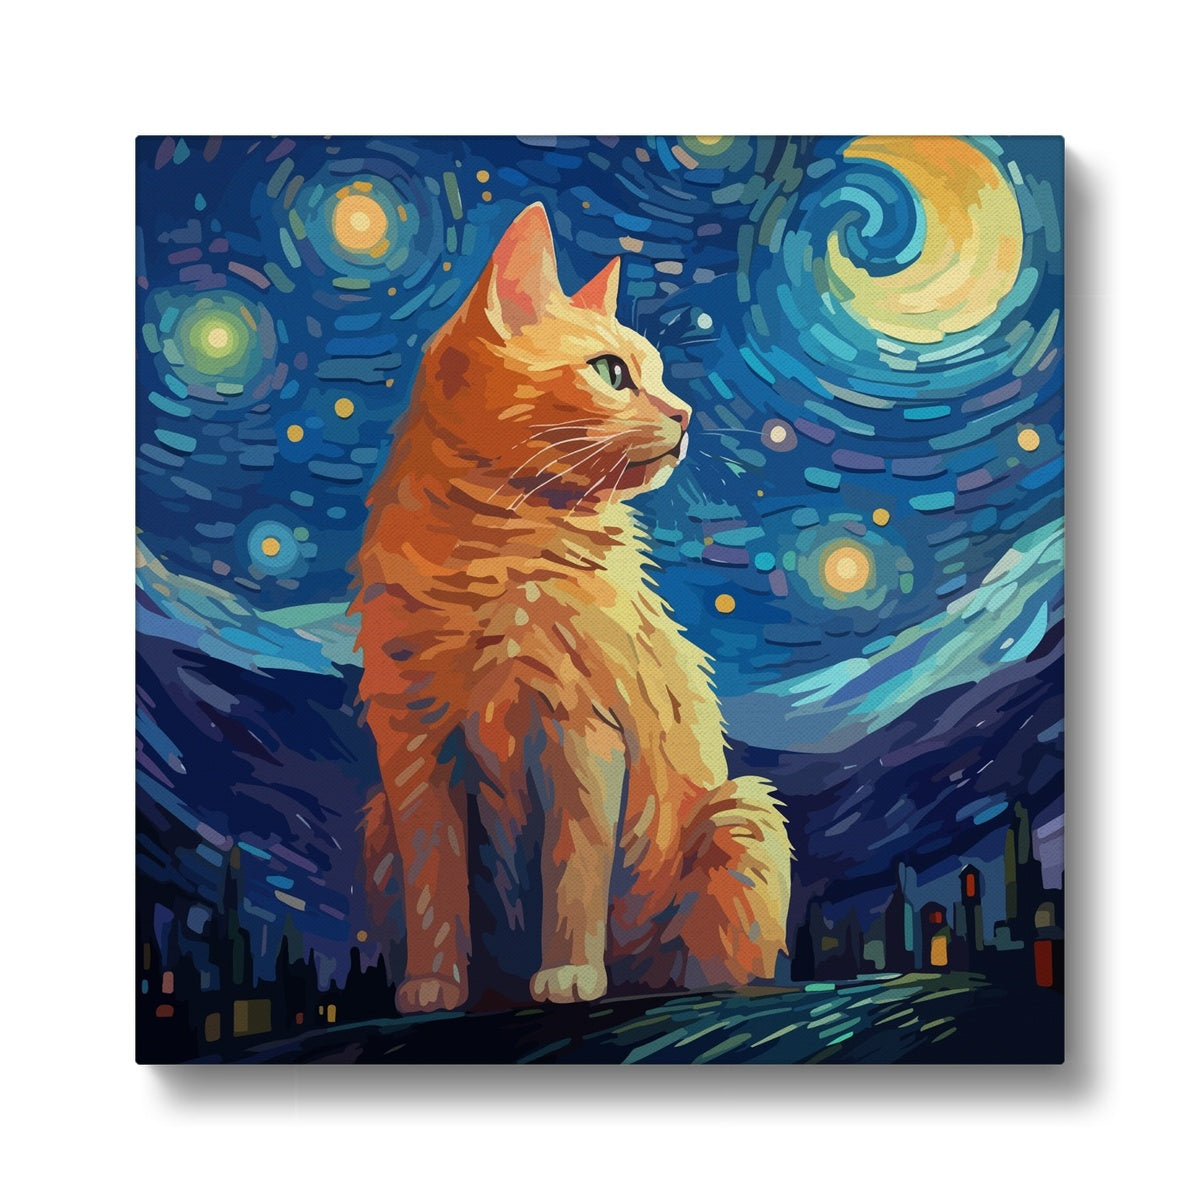 Ethereal Van Gogh's Cat Creation Canvas